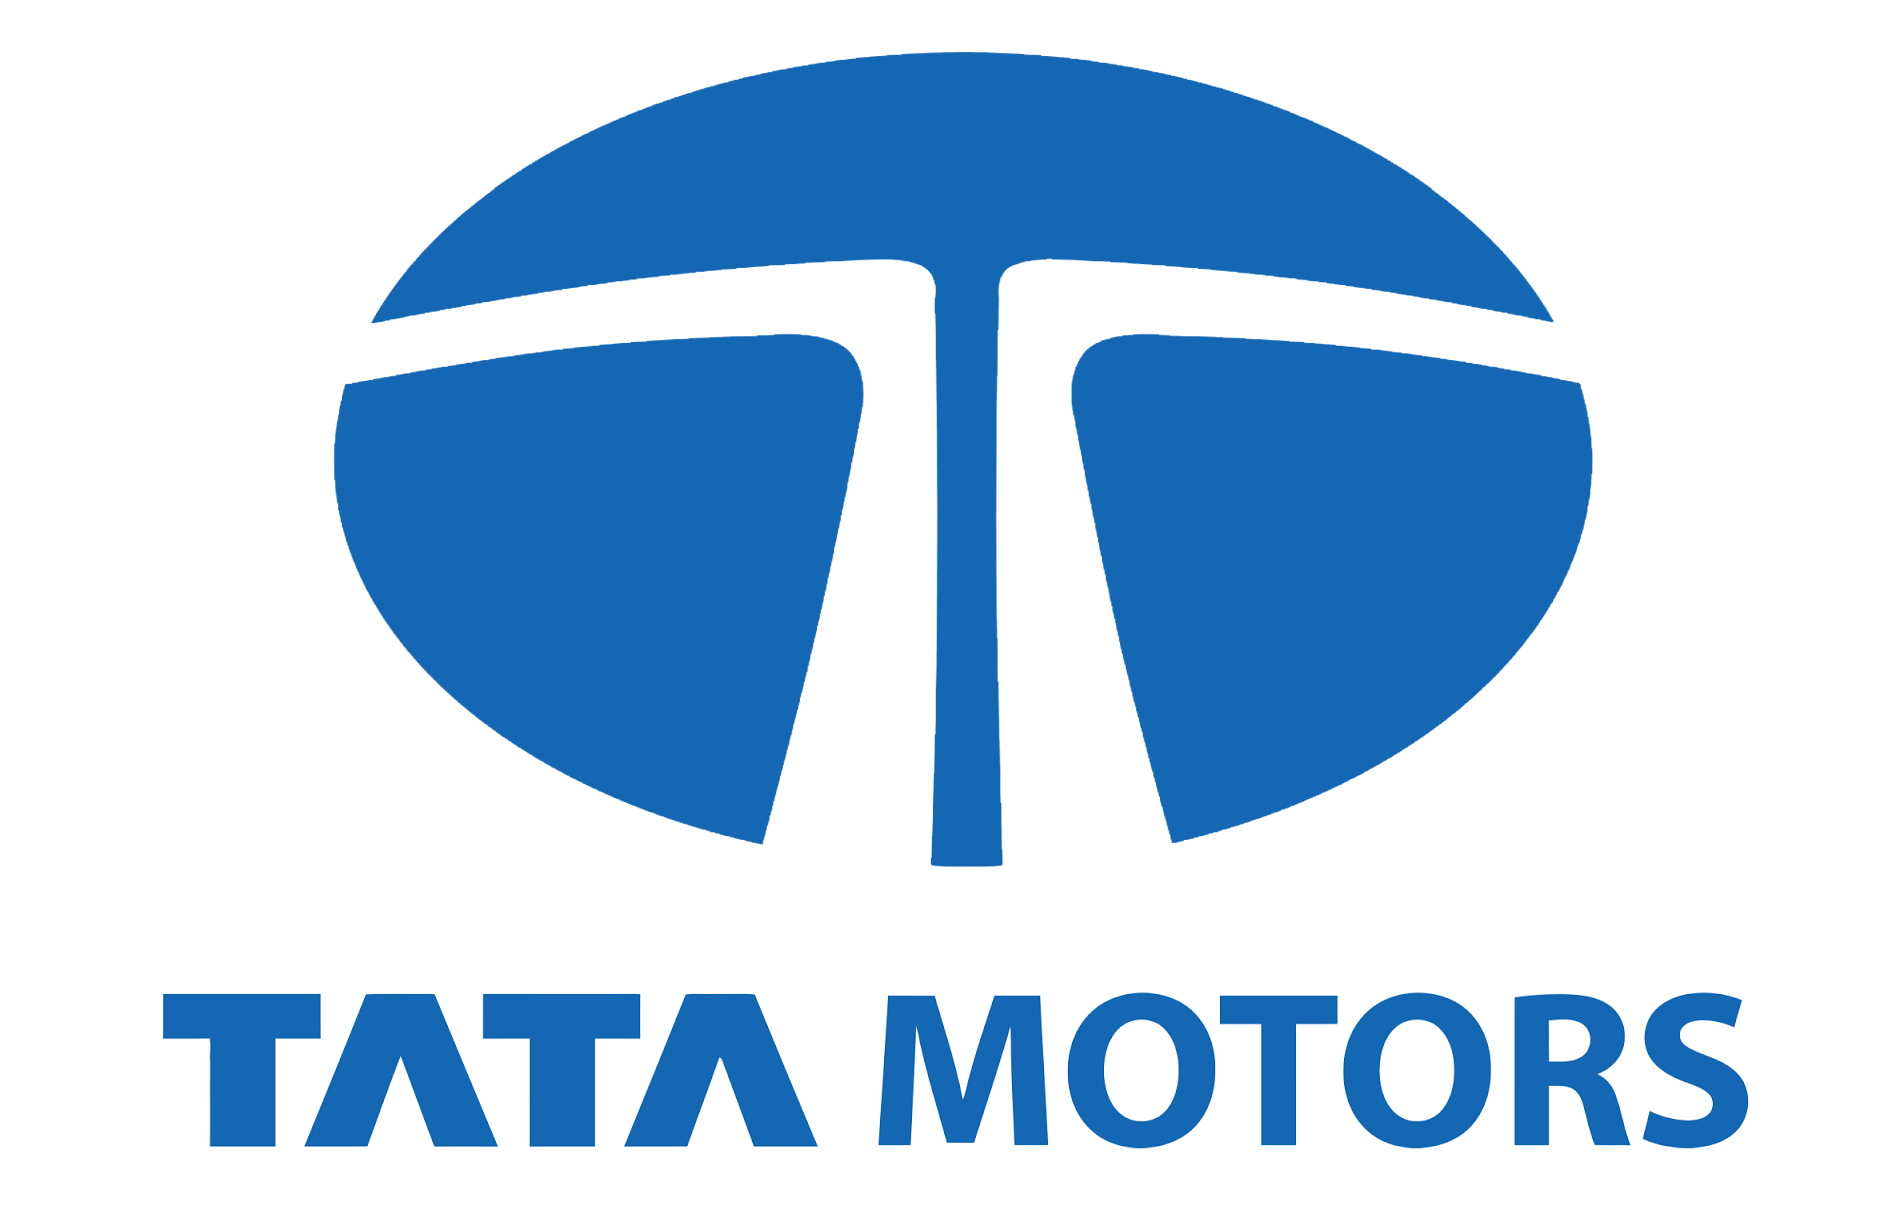 Tata Motors Cars Showroom - Samarth Cars|Show Room|Automotive